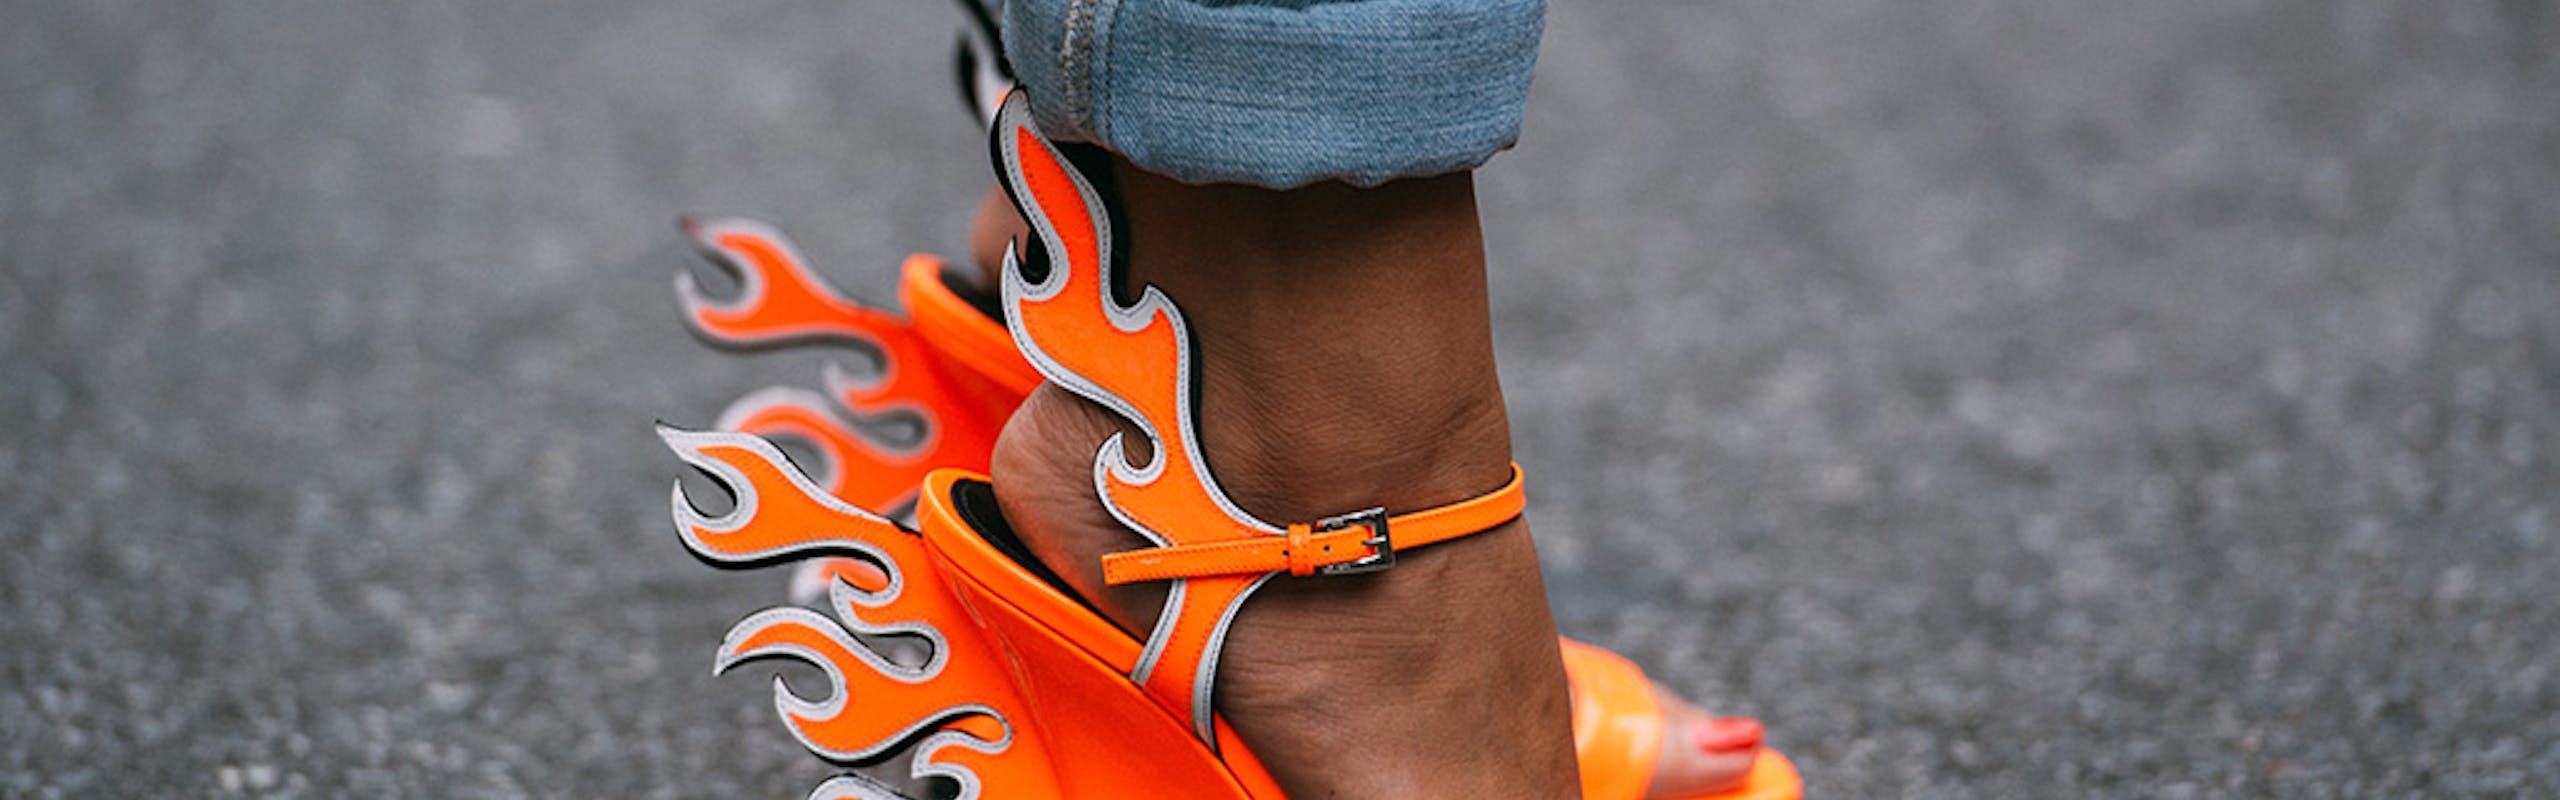 Closeup of someone's feet wearing the neon orange Prada wedges with flames. 